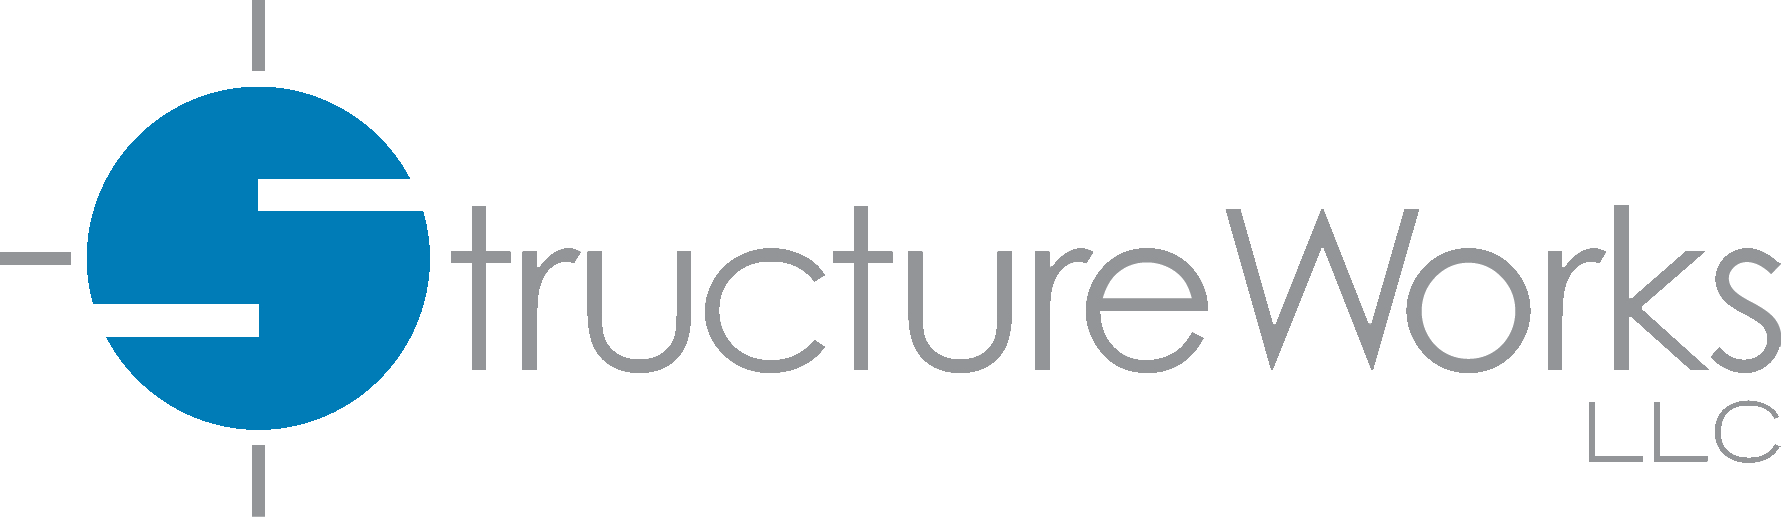 BIM Software Logo - StructureWorks. BIM Software Driving the Precast Industry